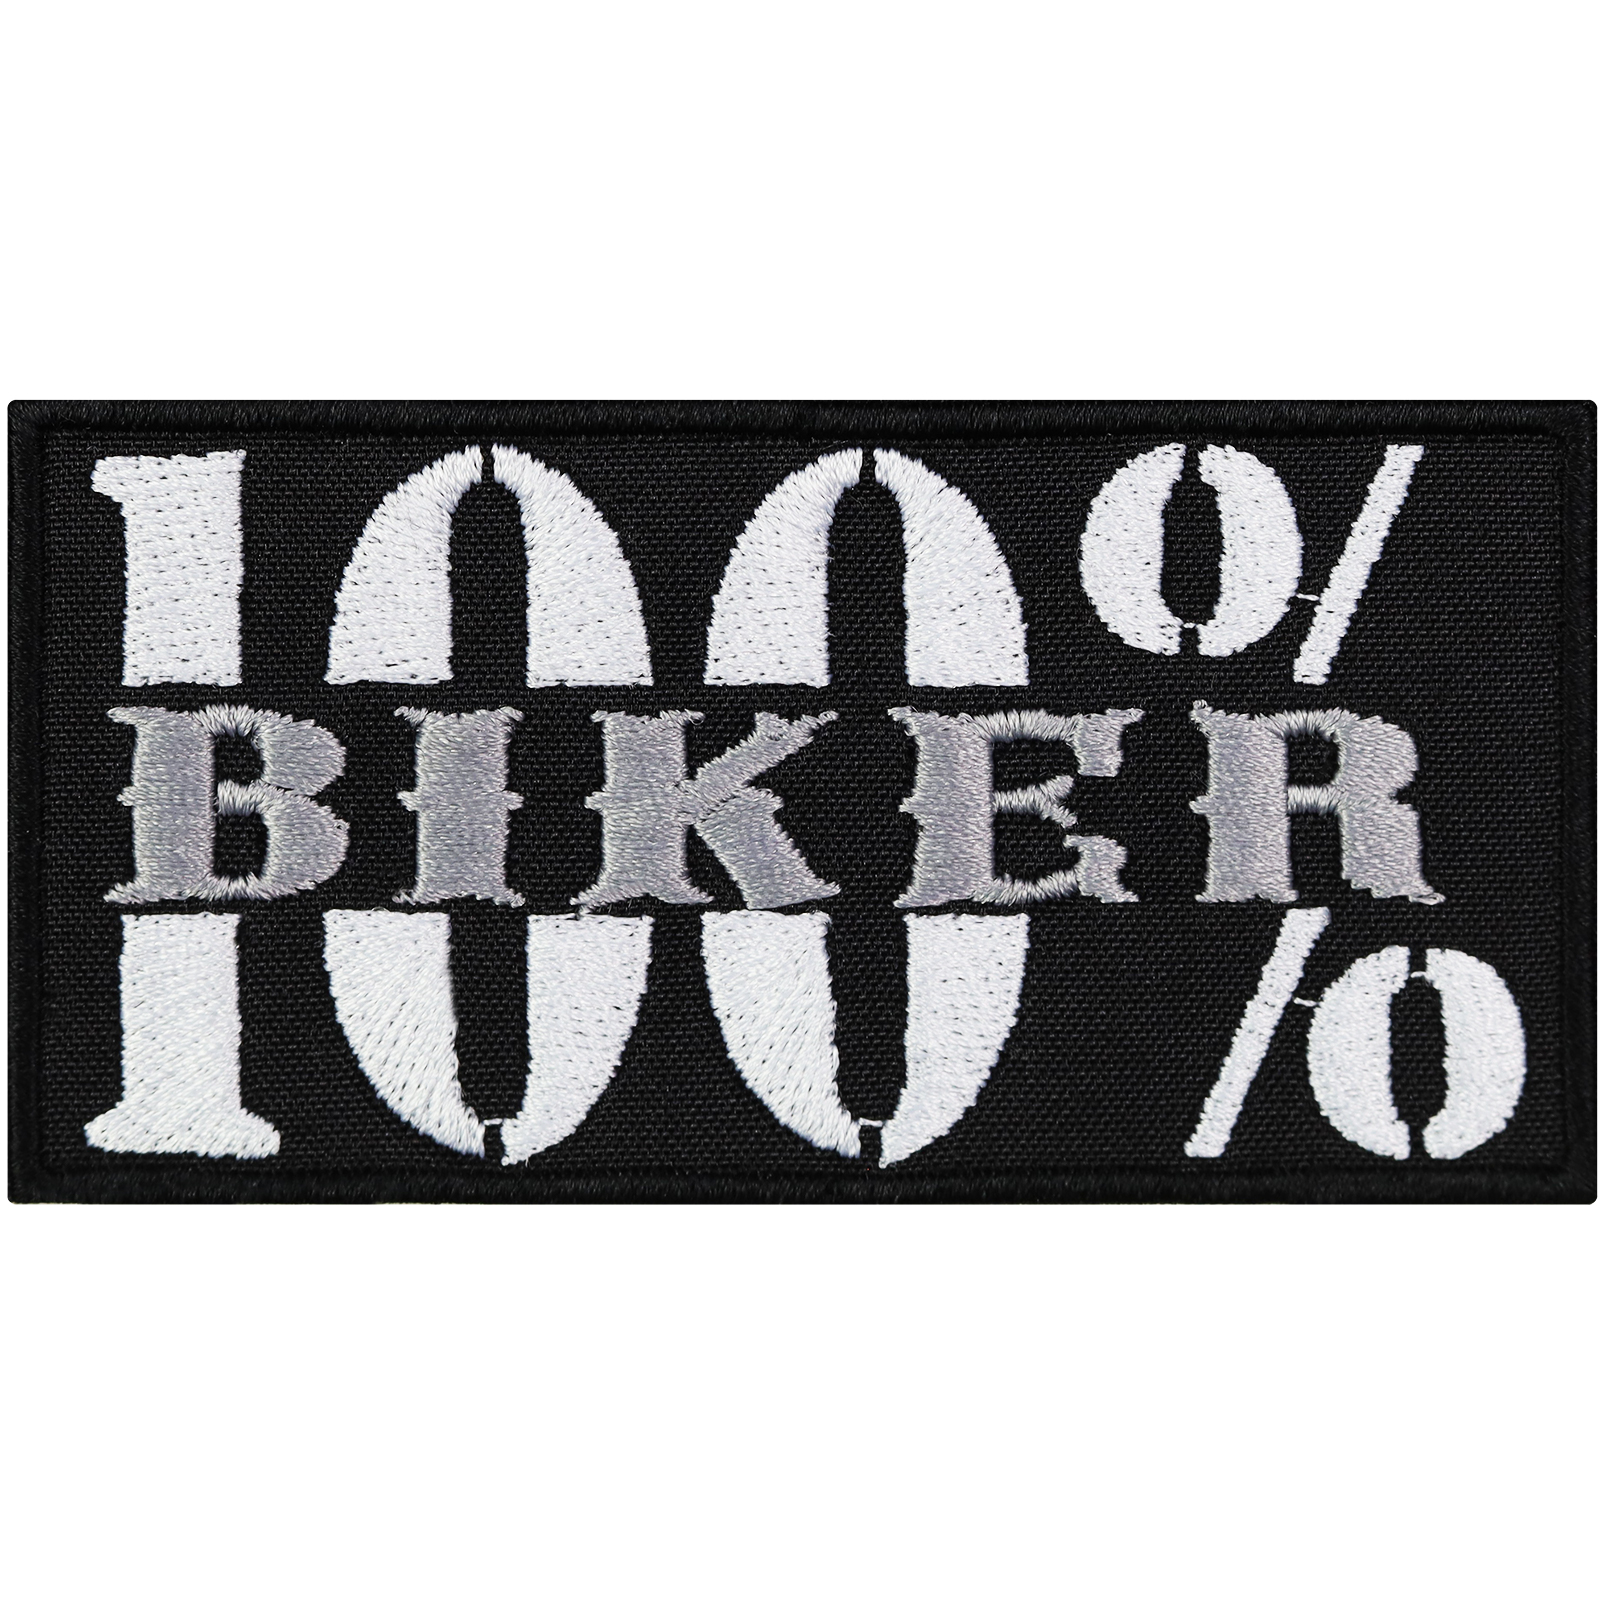 100% Biker - Patch